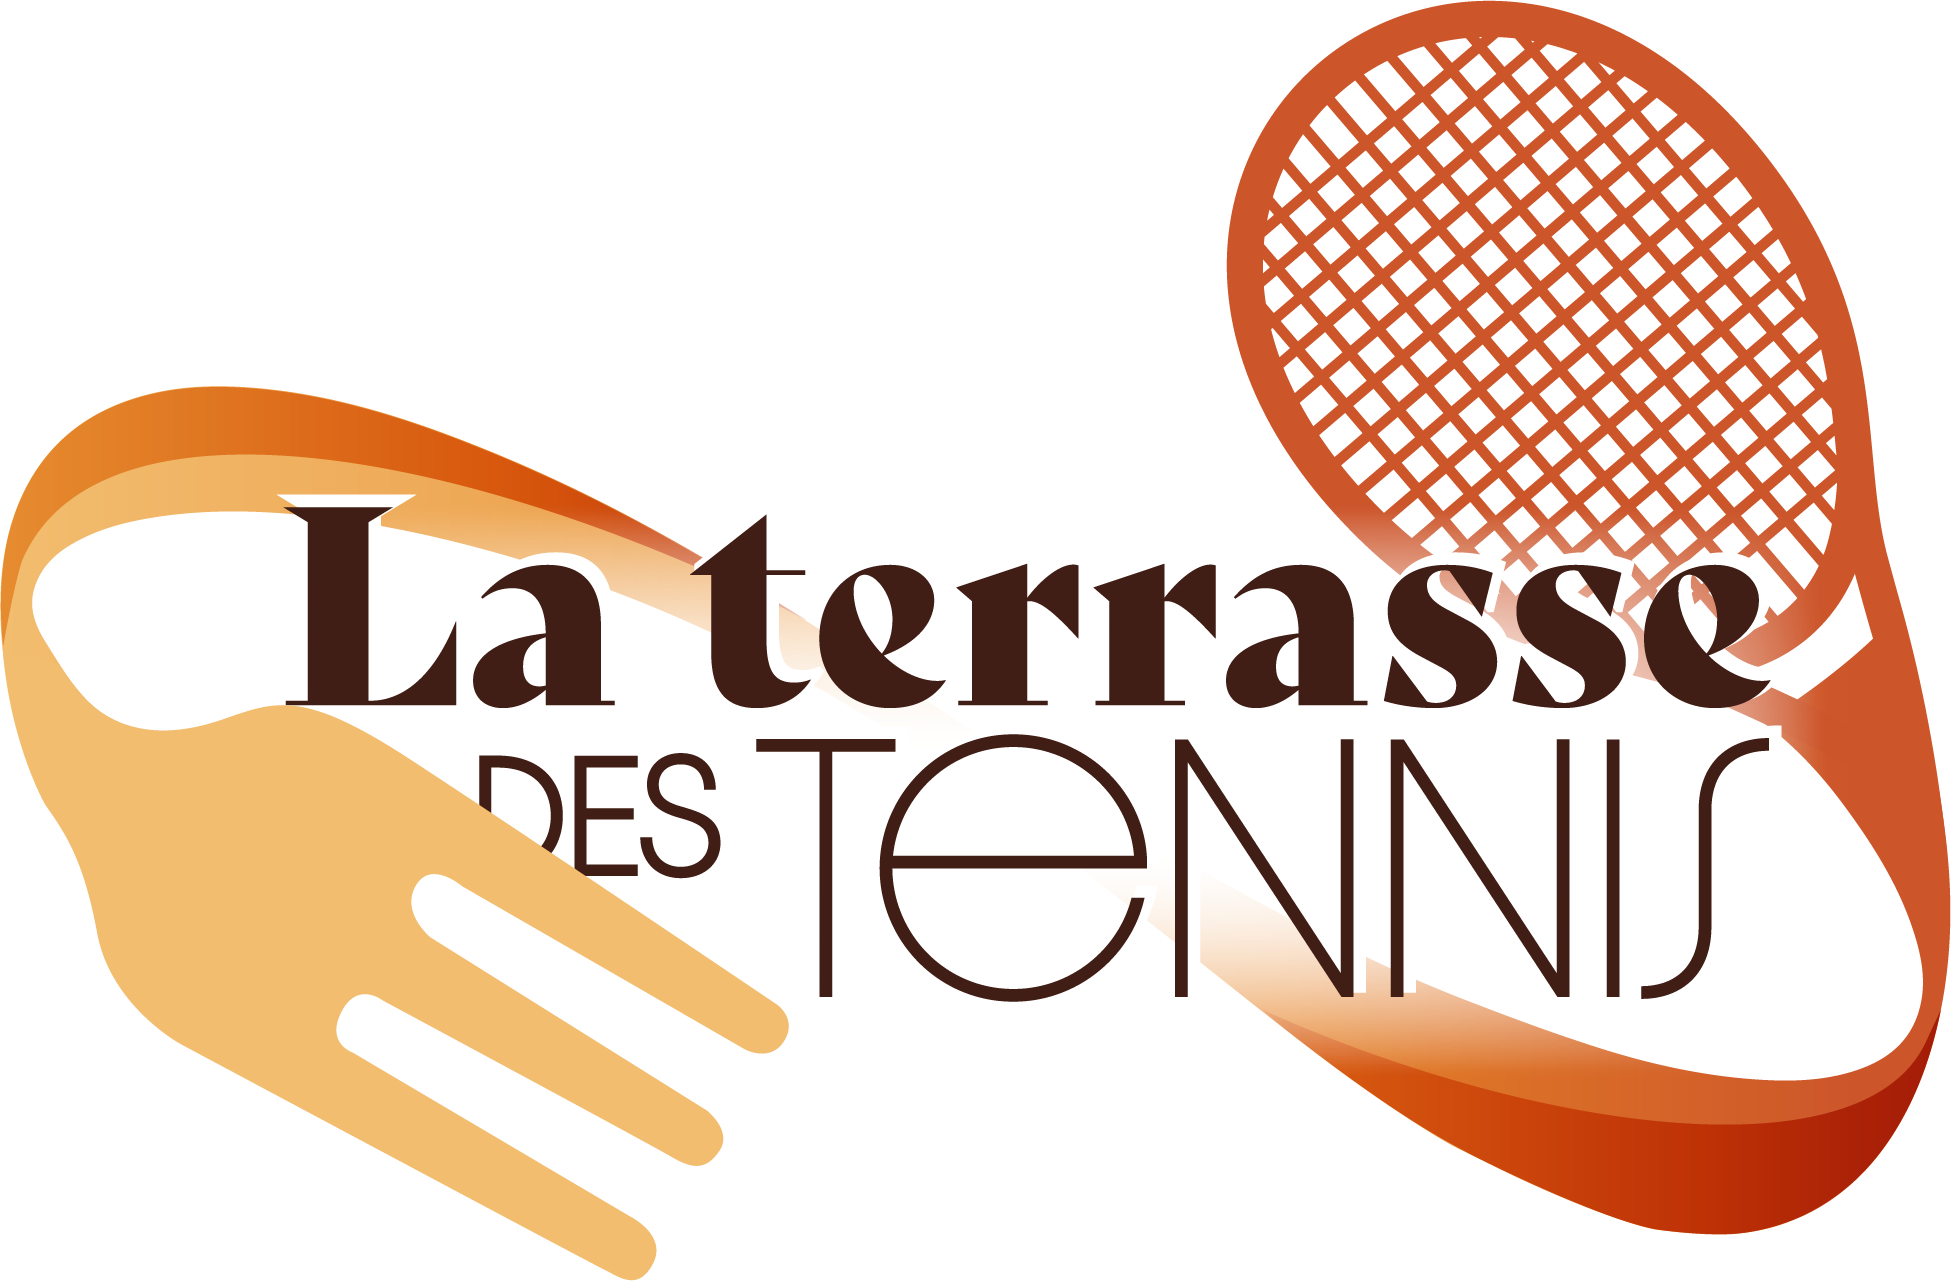 la terrasse du tennis logo